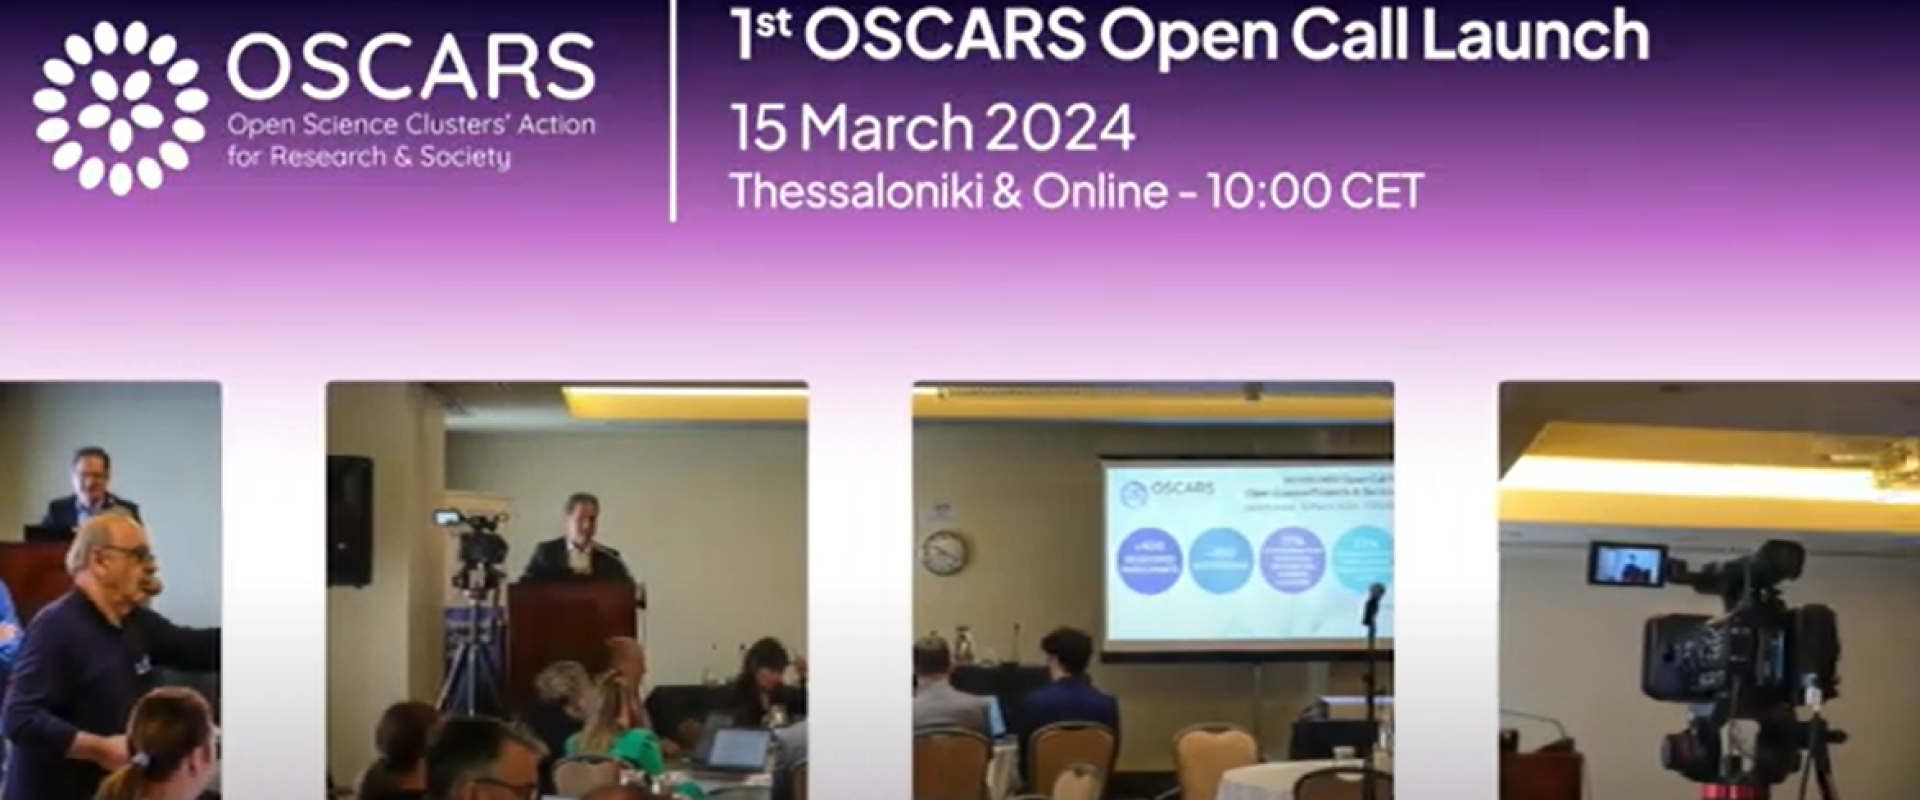 OSCARS Open Call